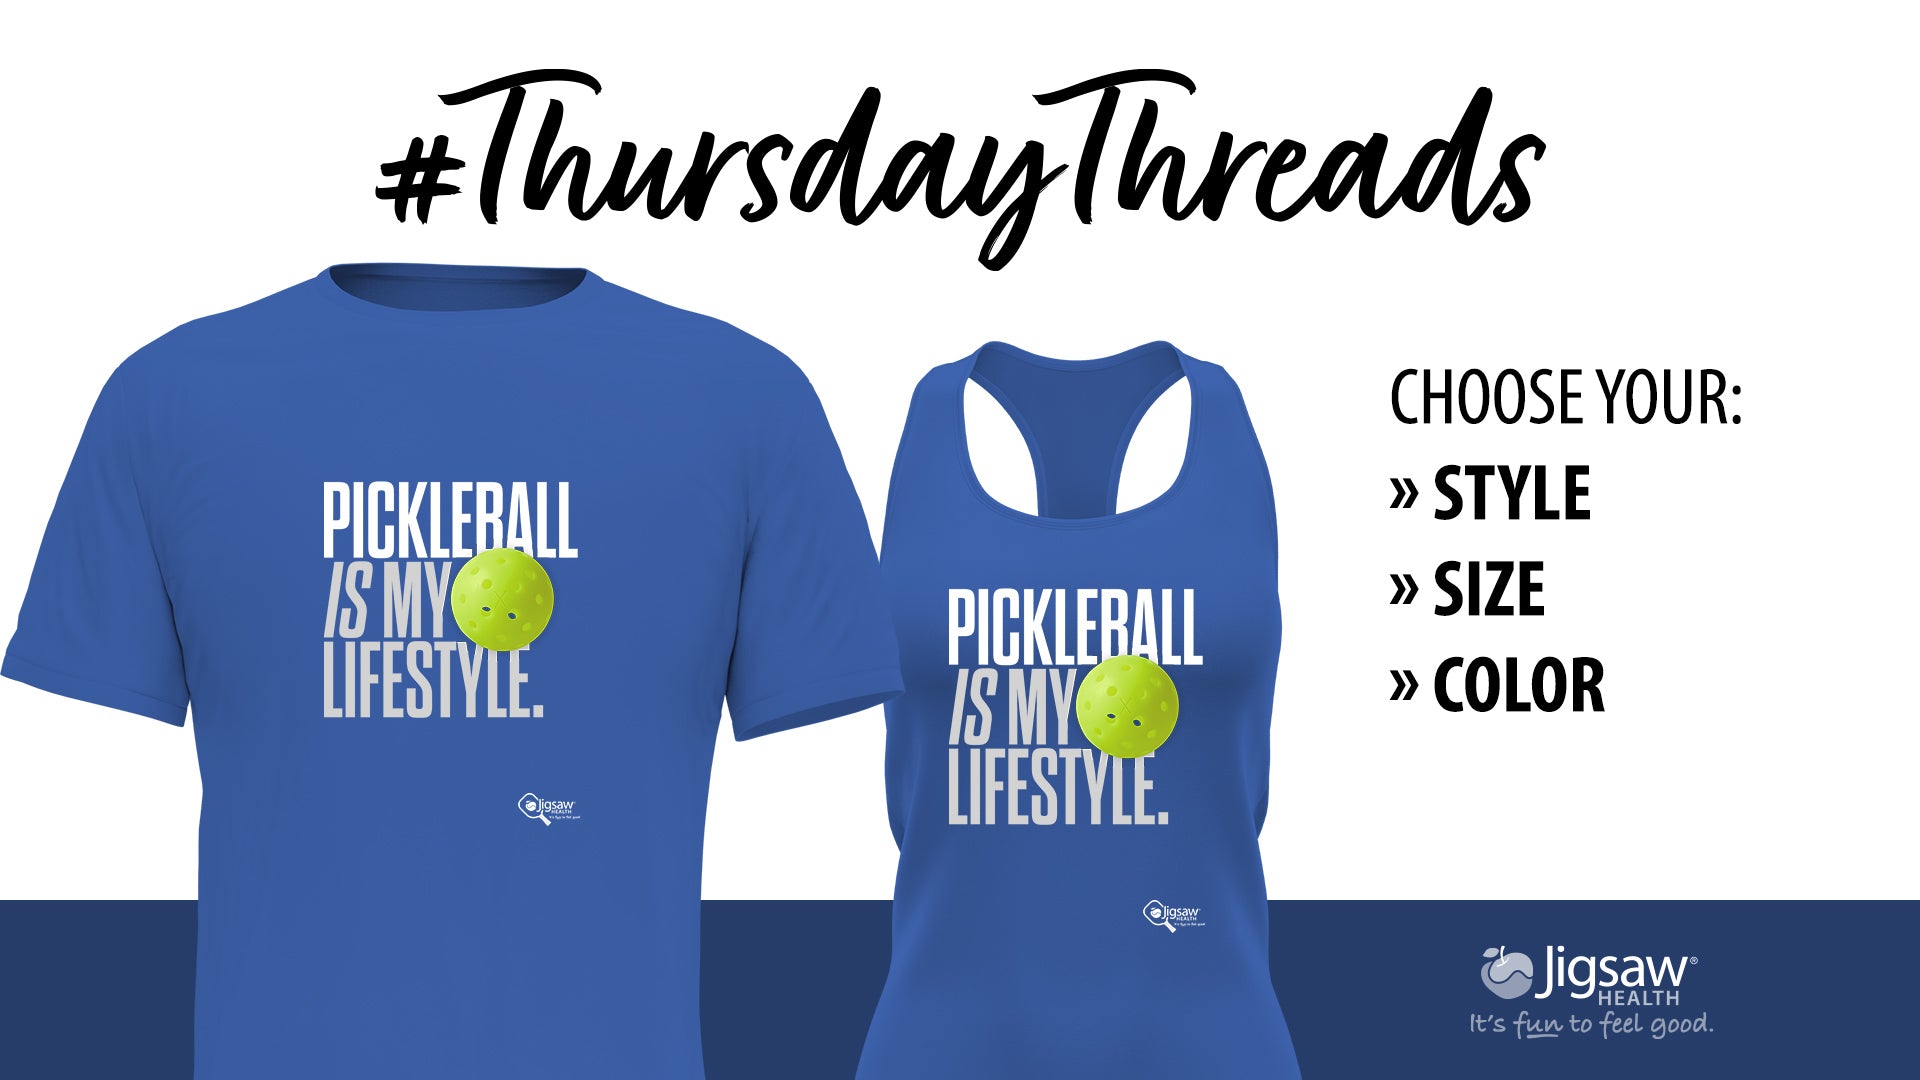 Pickleball Is My Lifestyle | #ThursdayThreads